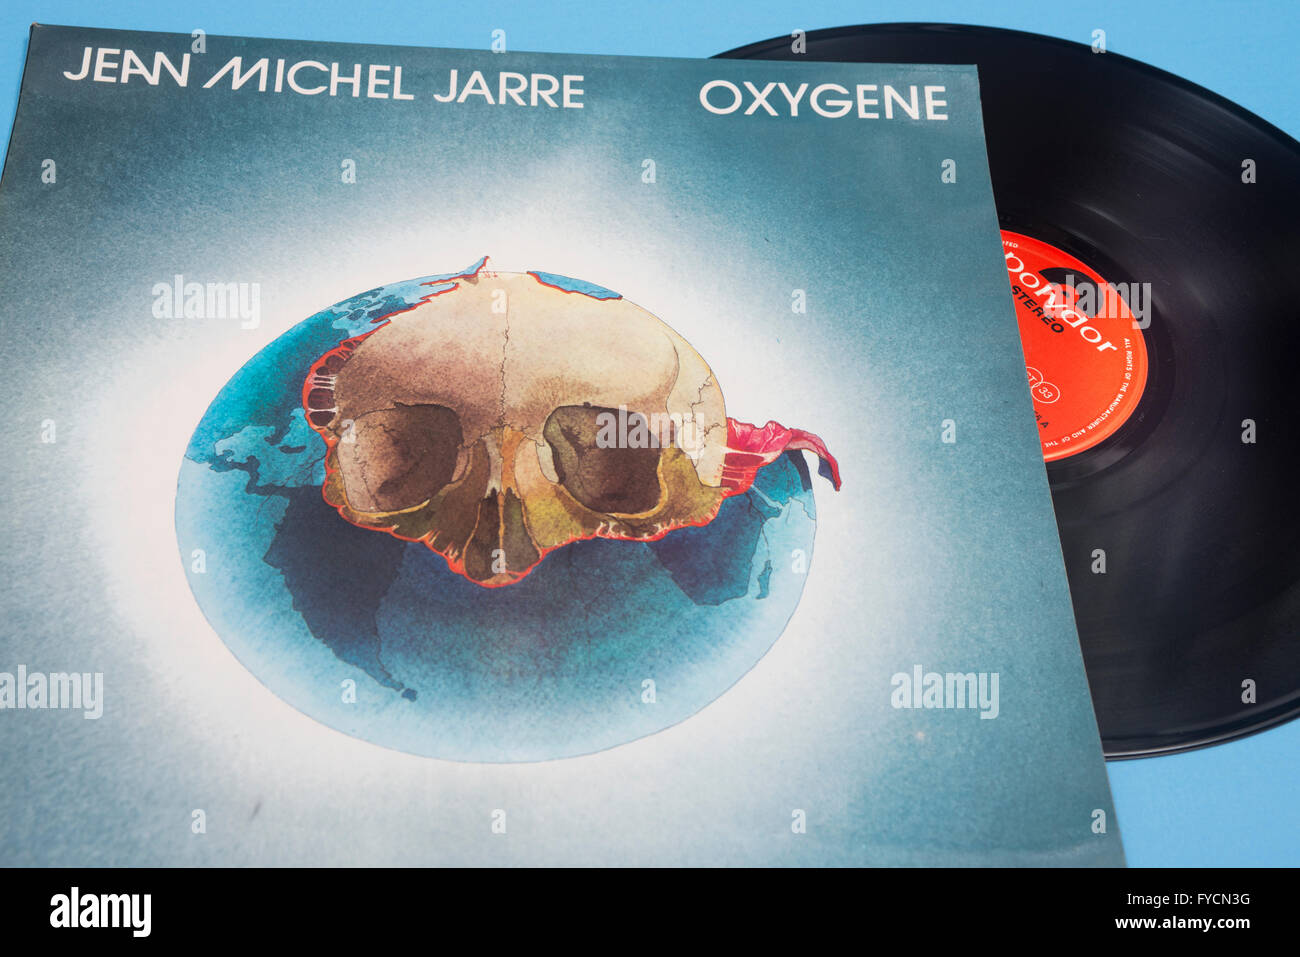 Oxygene album on vinyl by Jean Michel Jarre with original sleeve artwork  Stock Photo - Alamy